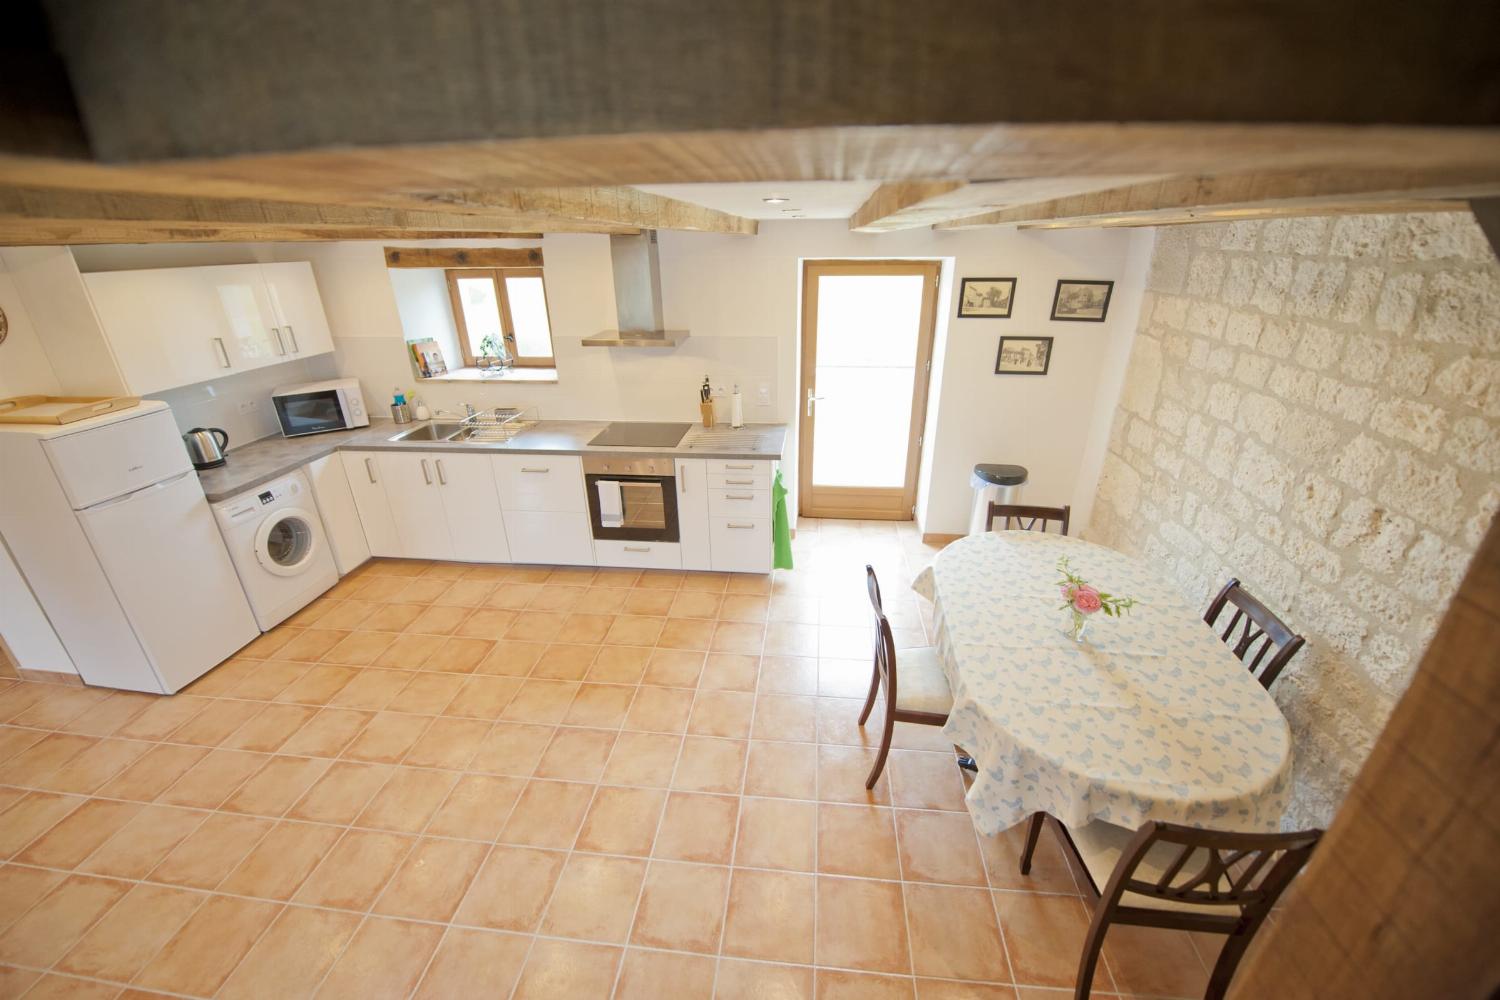 Kitchen | Holiday home in Tarn-en-Garonne